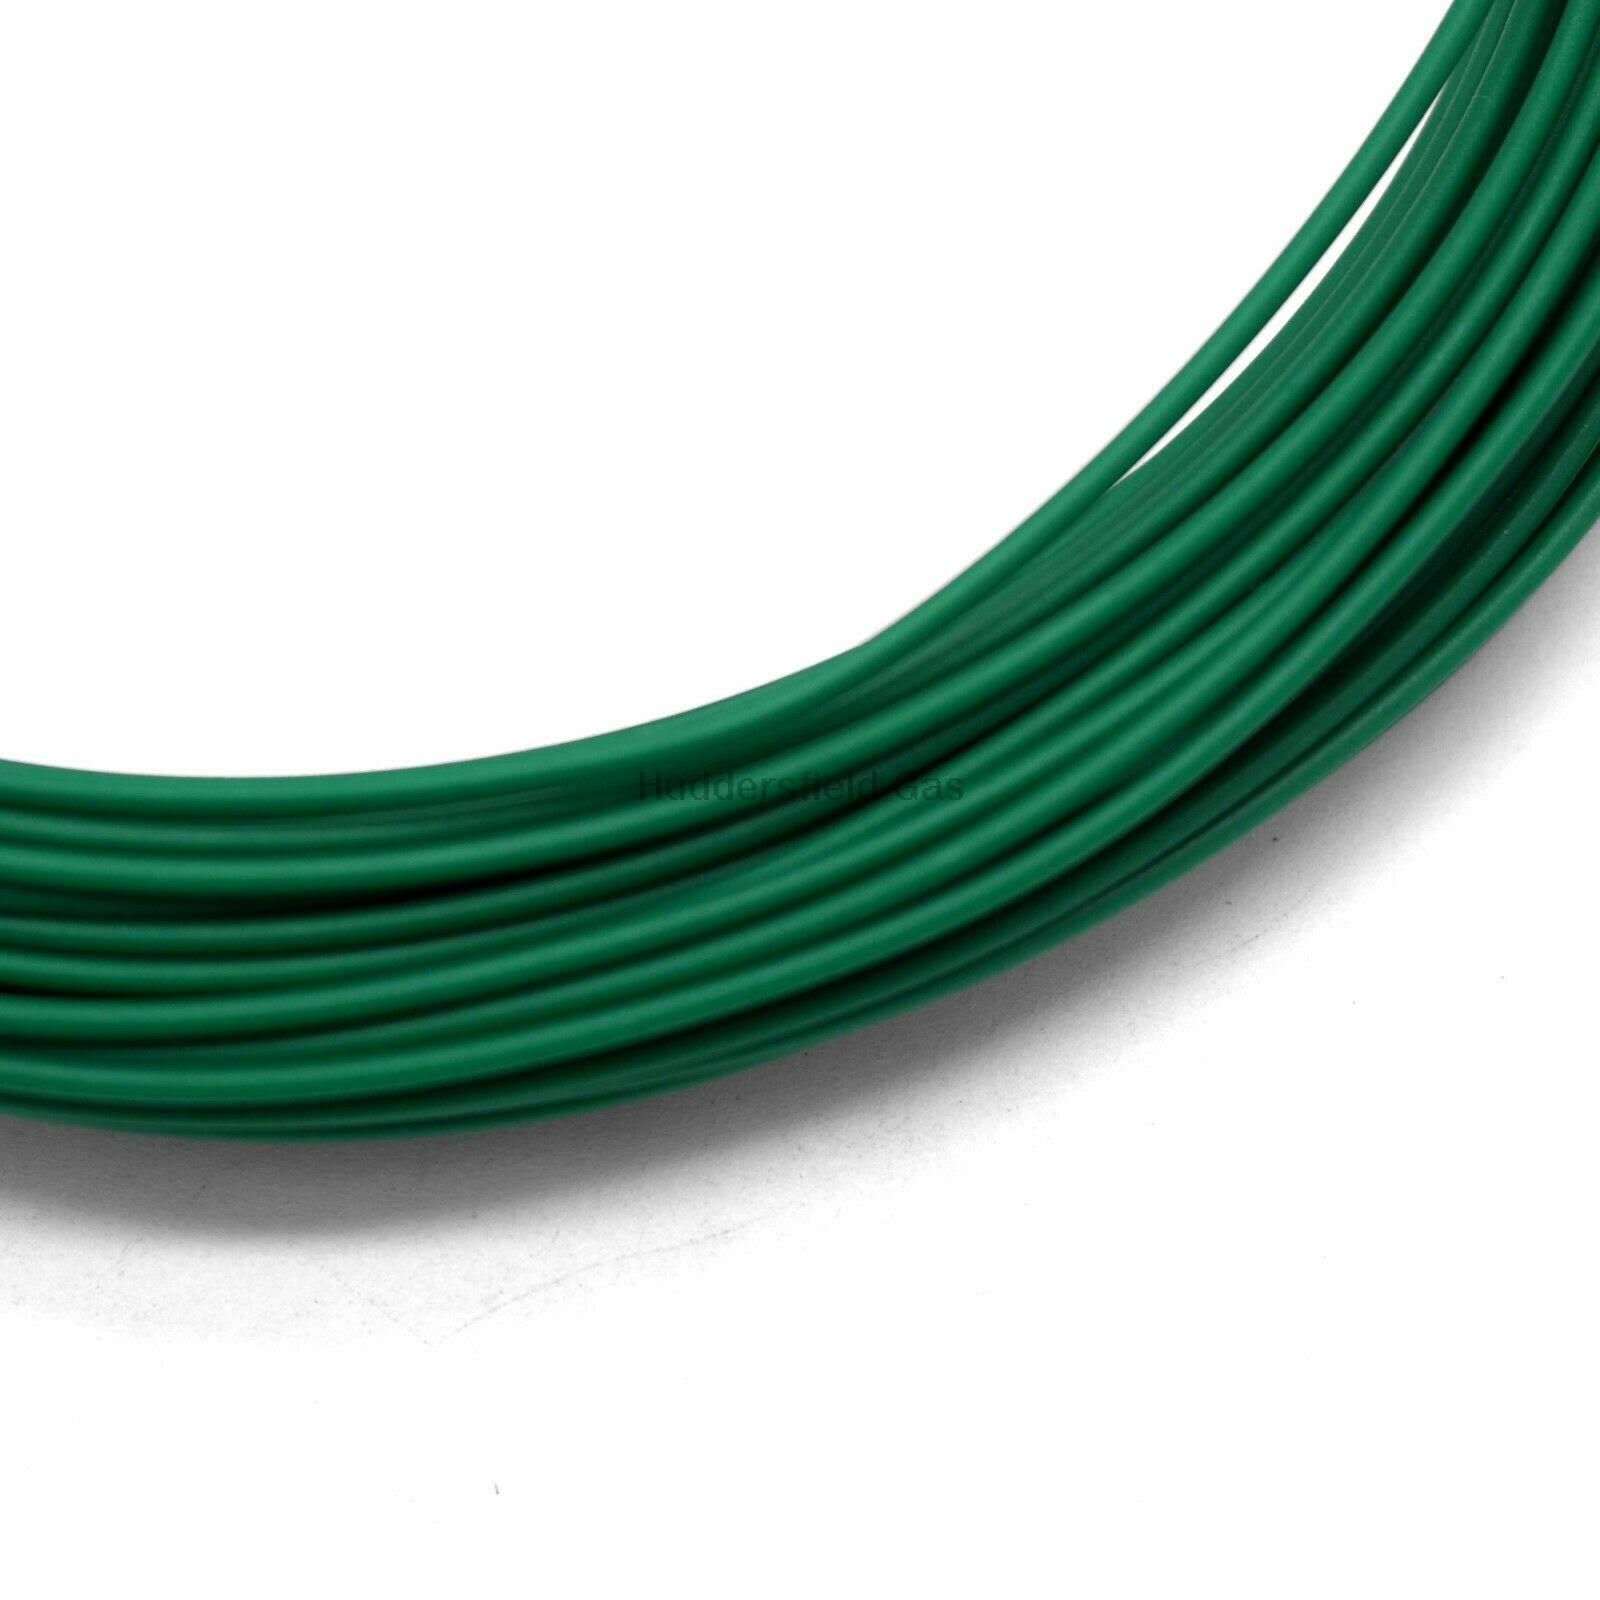 SupaGarden PVC Coated Wire 2mm x 15m